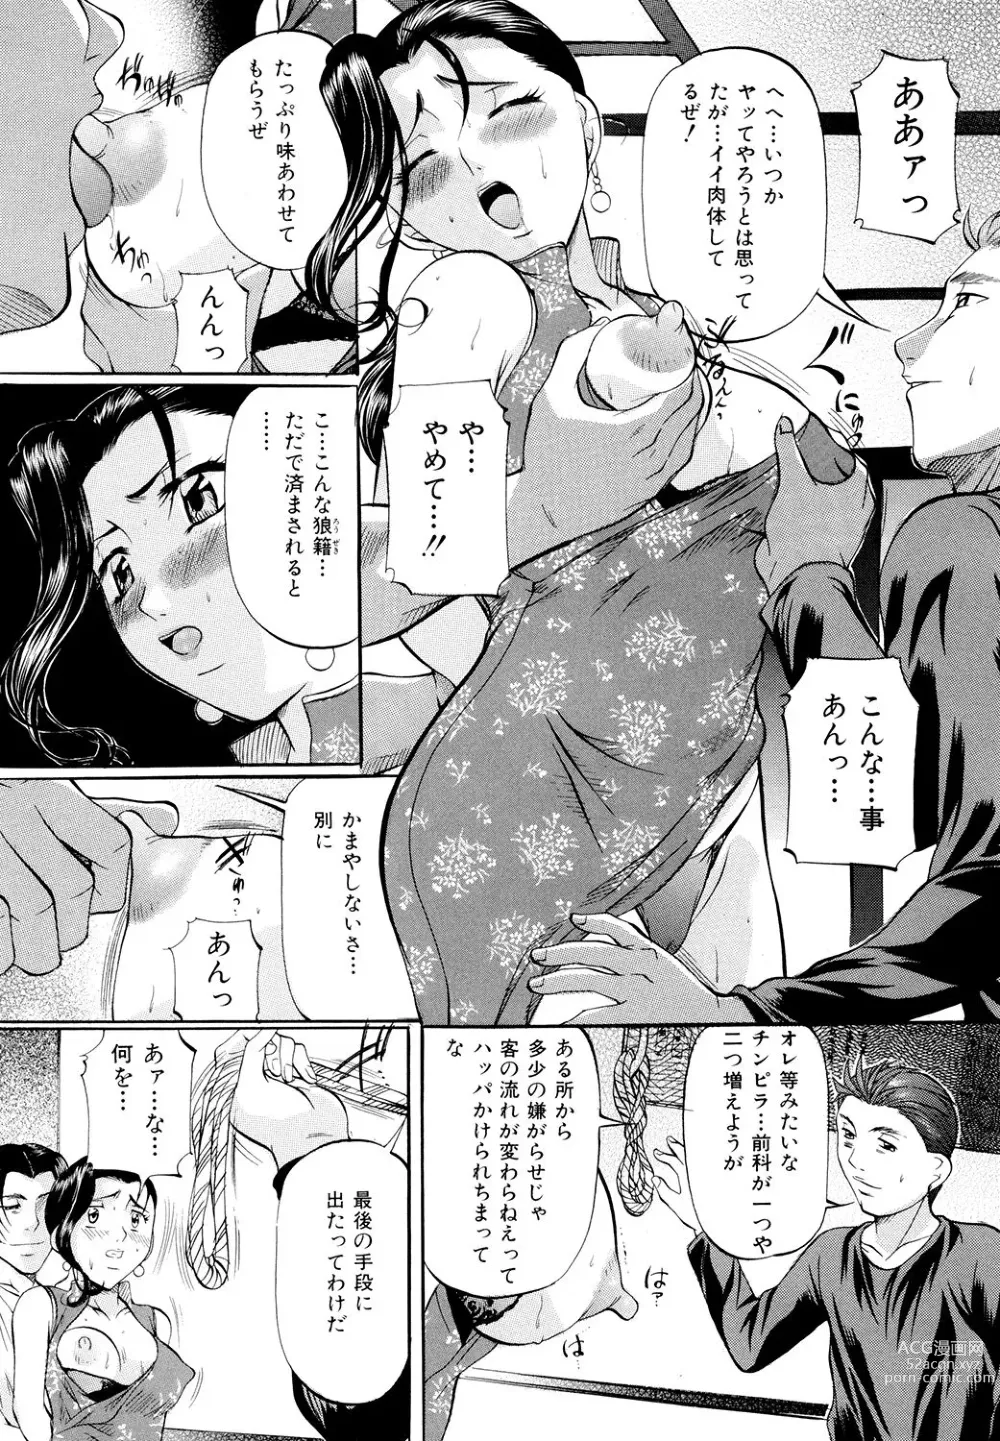 Page 10 of manga Kyonyuu Korogashi